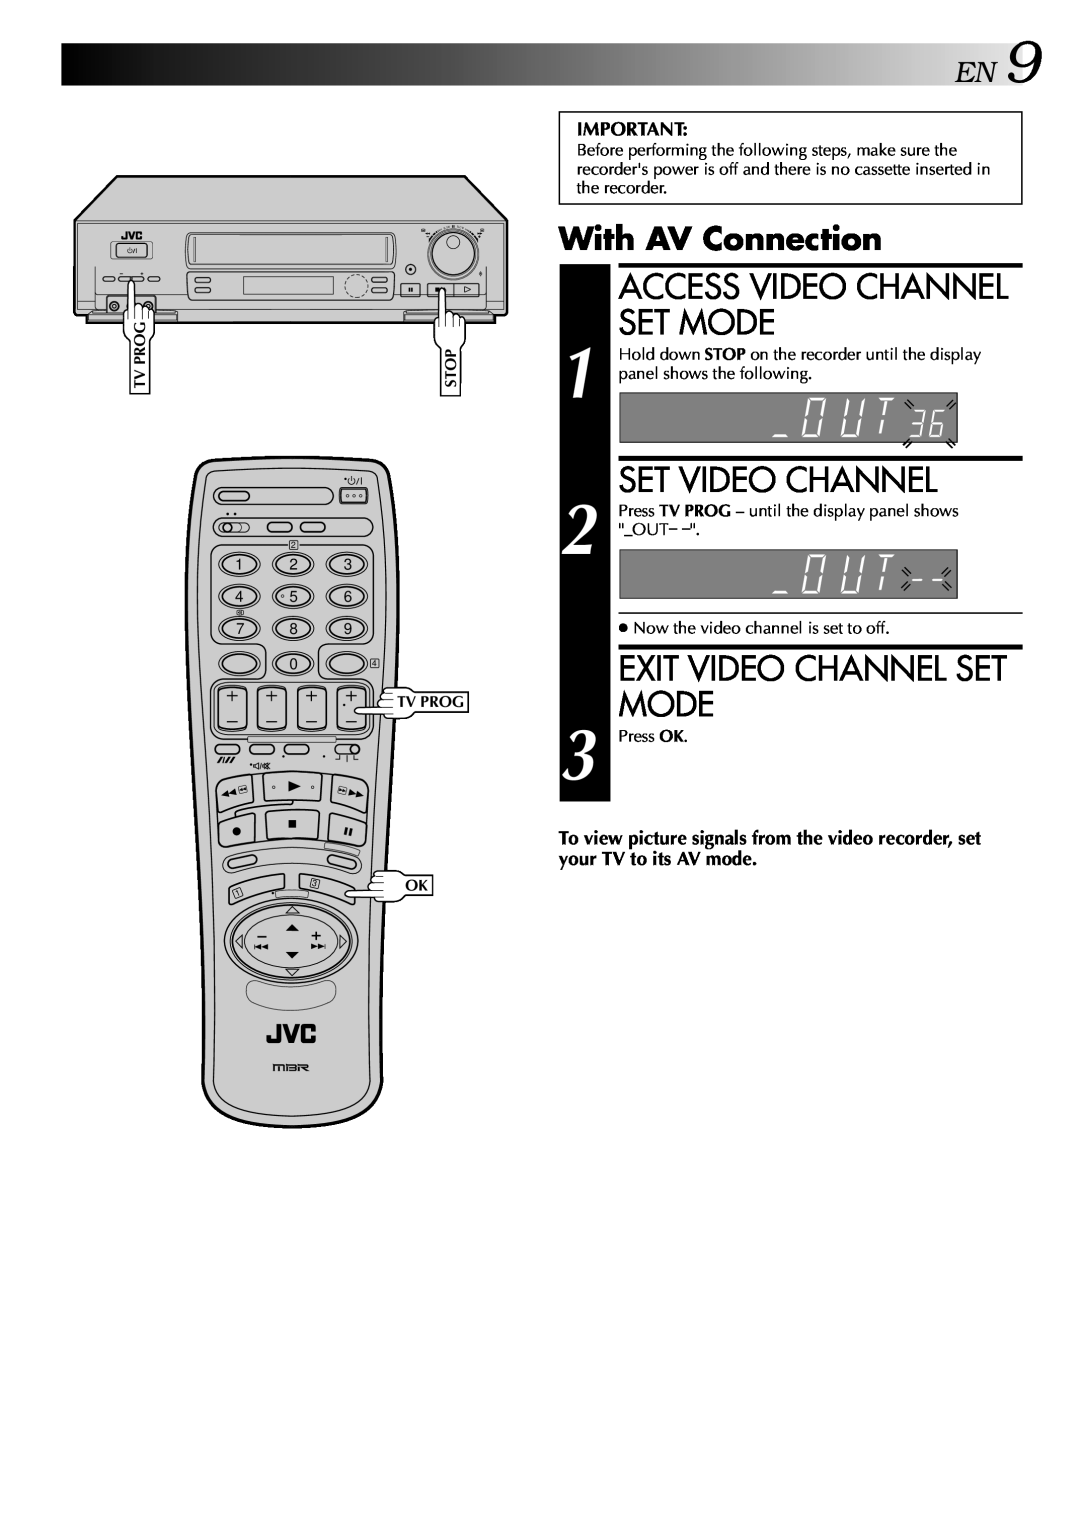 JVC HR-DD848E With AV Connection, Access Video Channel Set Mode, Set Video Channel, Exit Video Channel Set Mode 